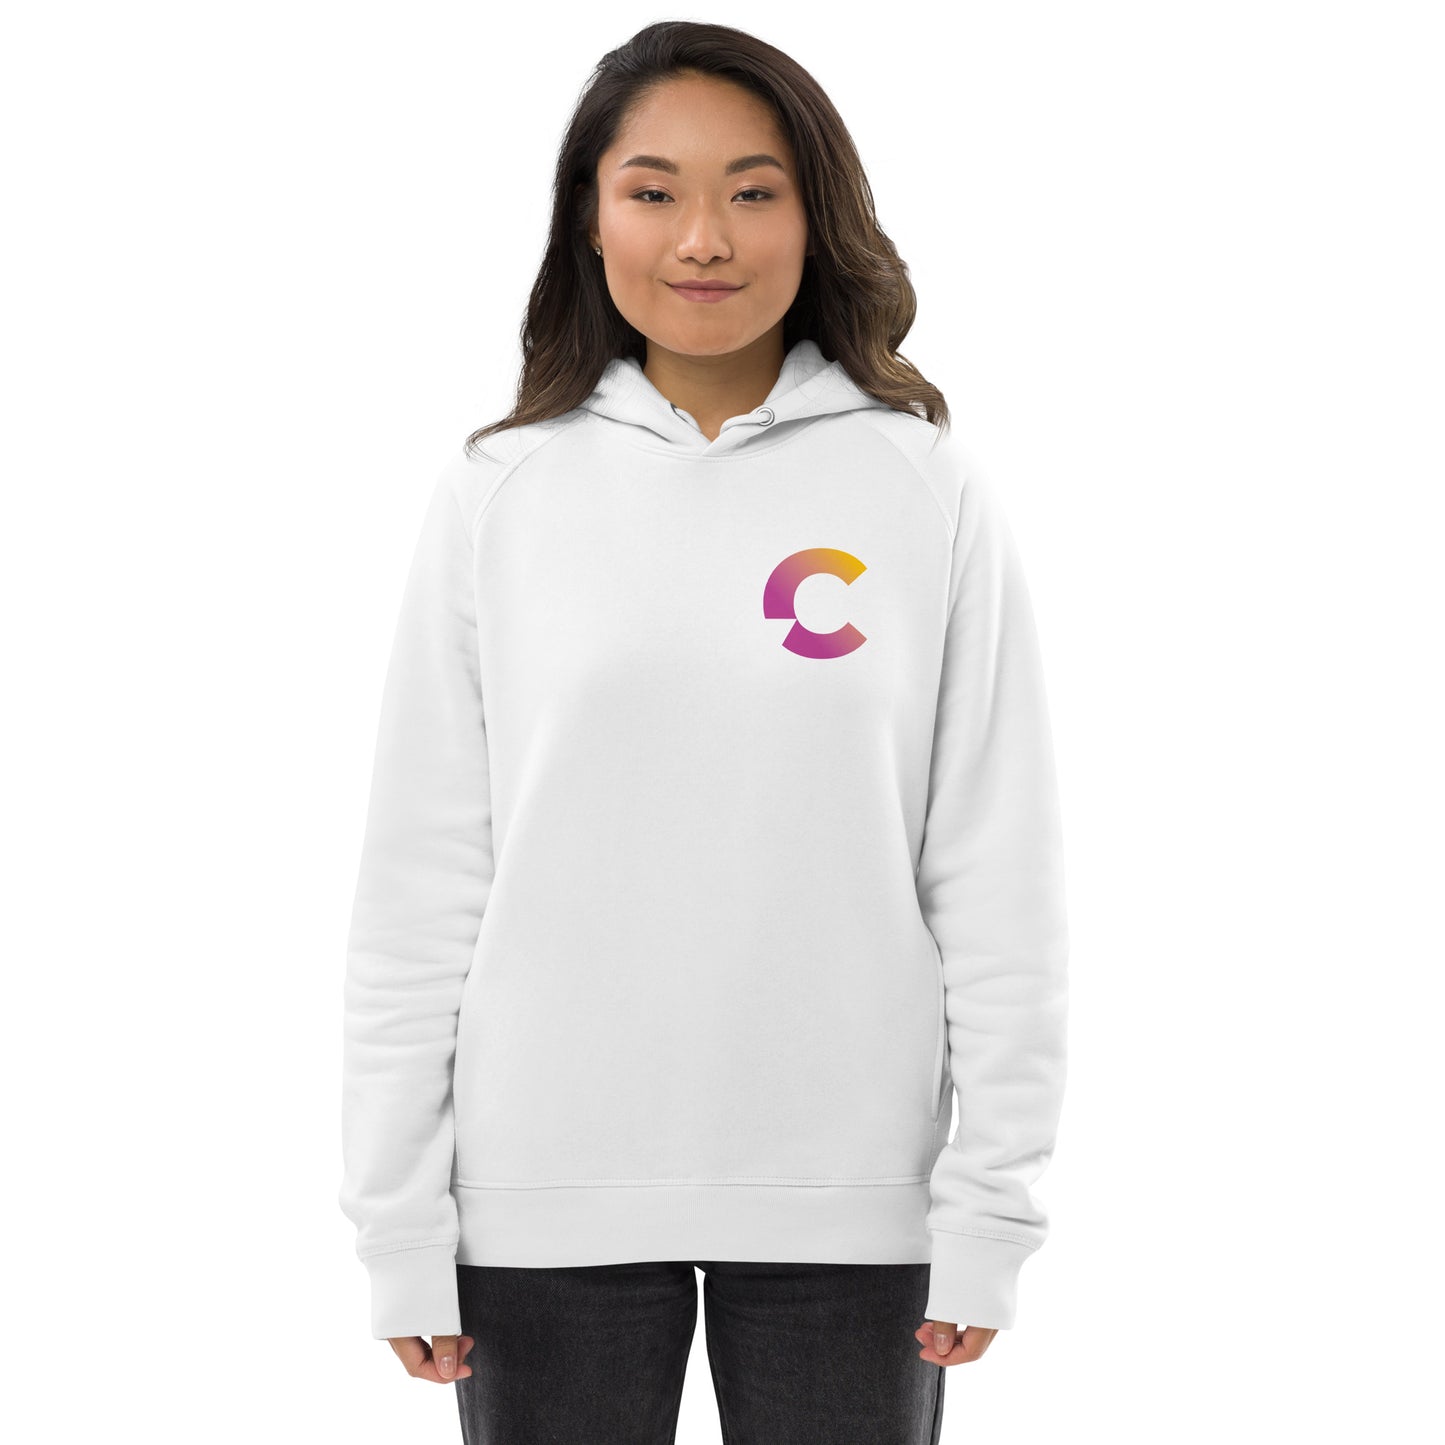 Crazy Charming Creators Unisex hoodie (White)